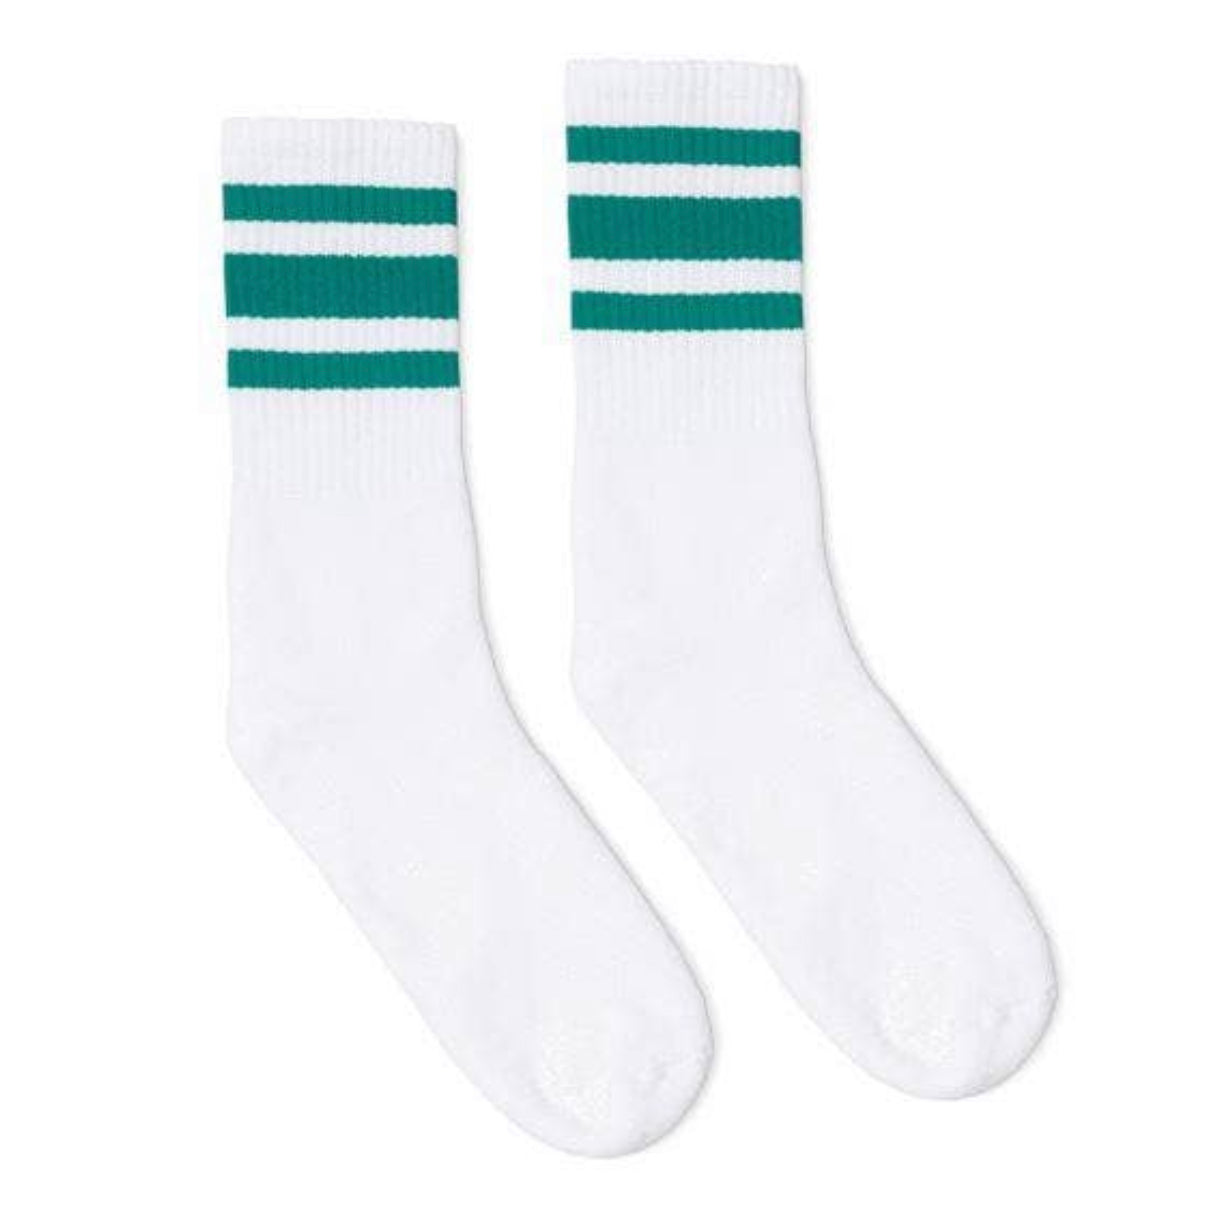 Teal & White Striped Socks